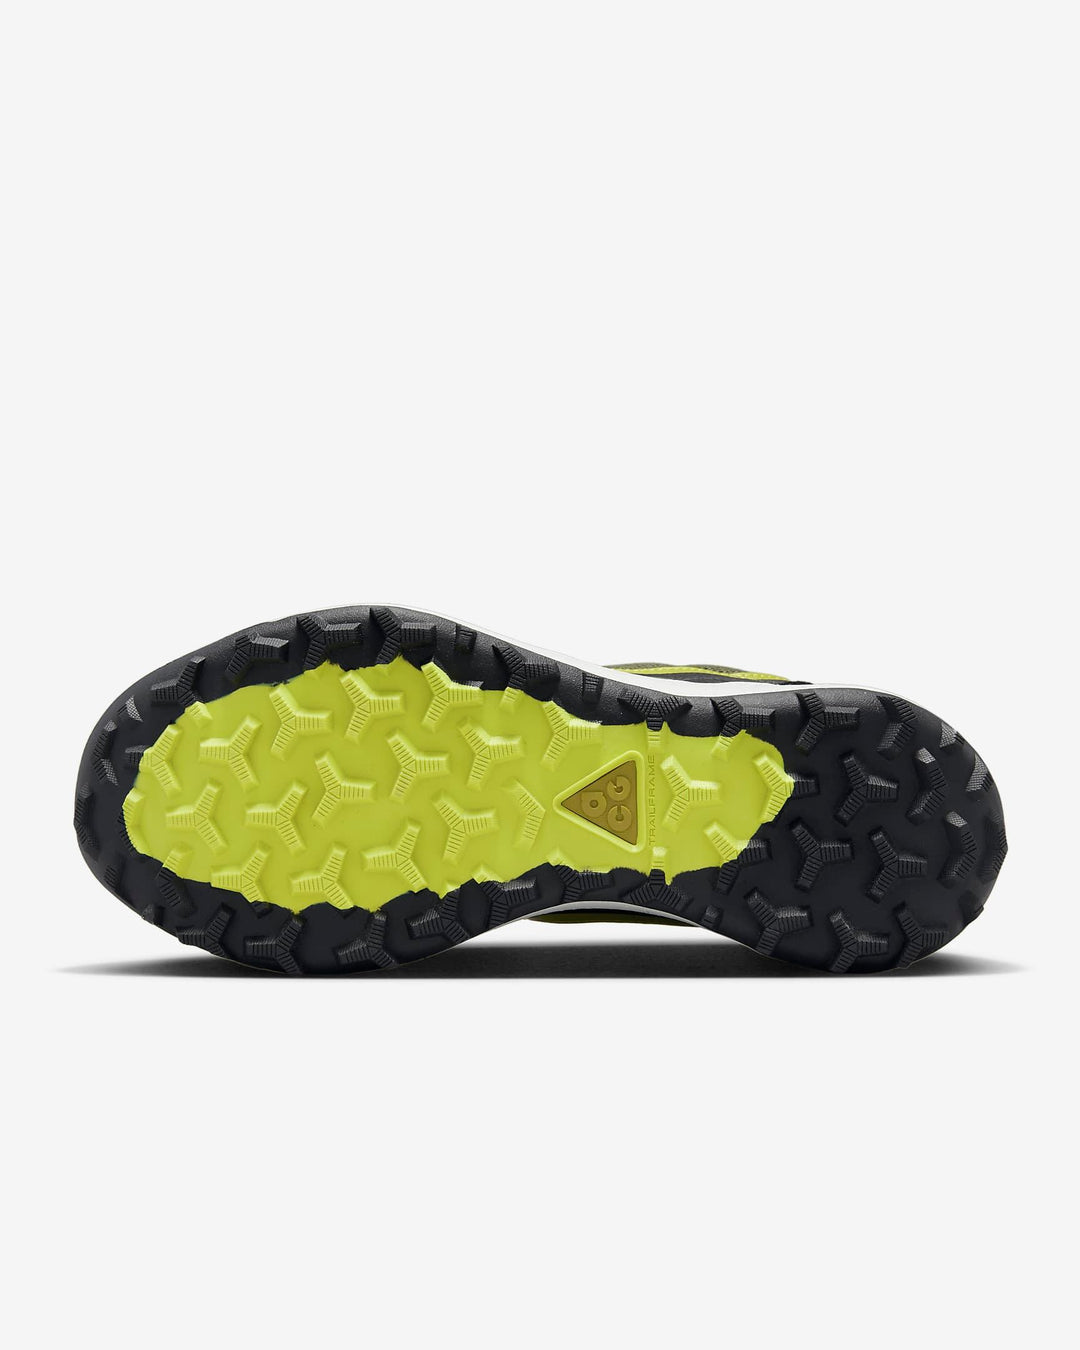 Giày Nike ACG Lowcate Shoes #Cargo Khaki - Kallos Vietnam